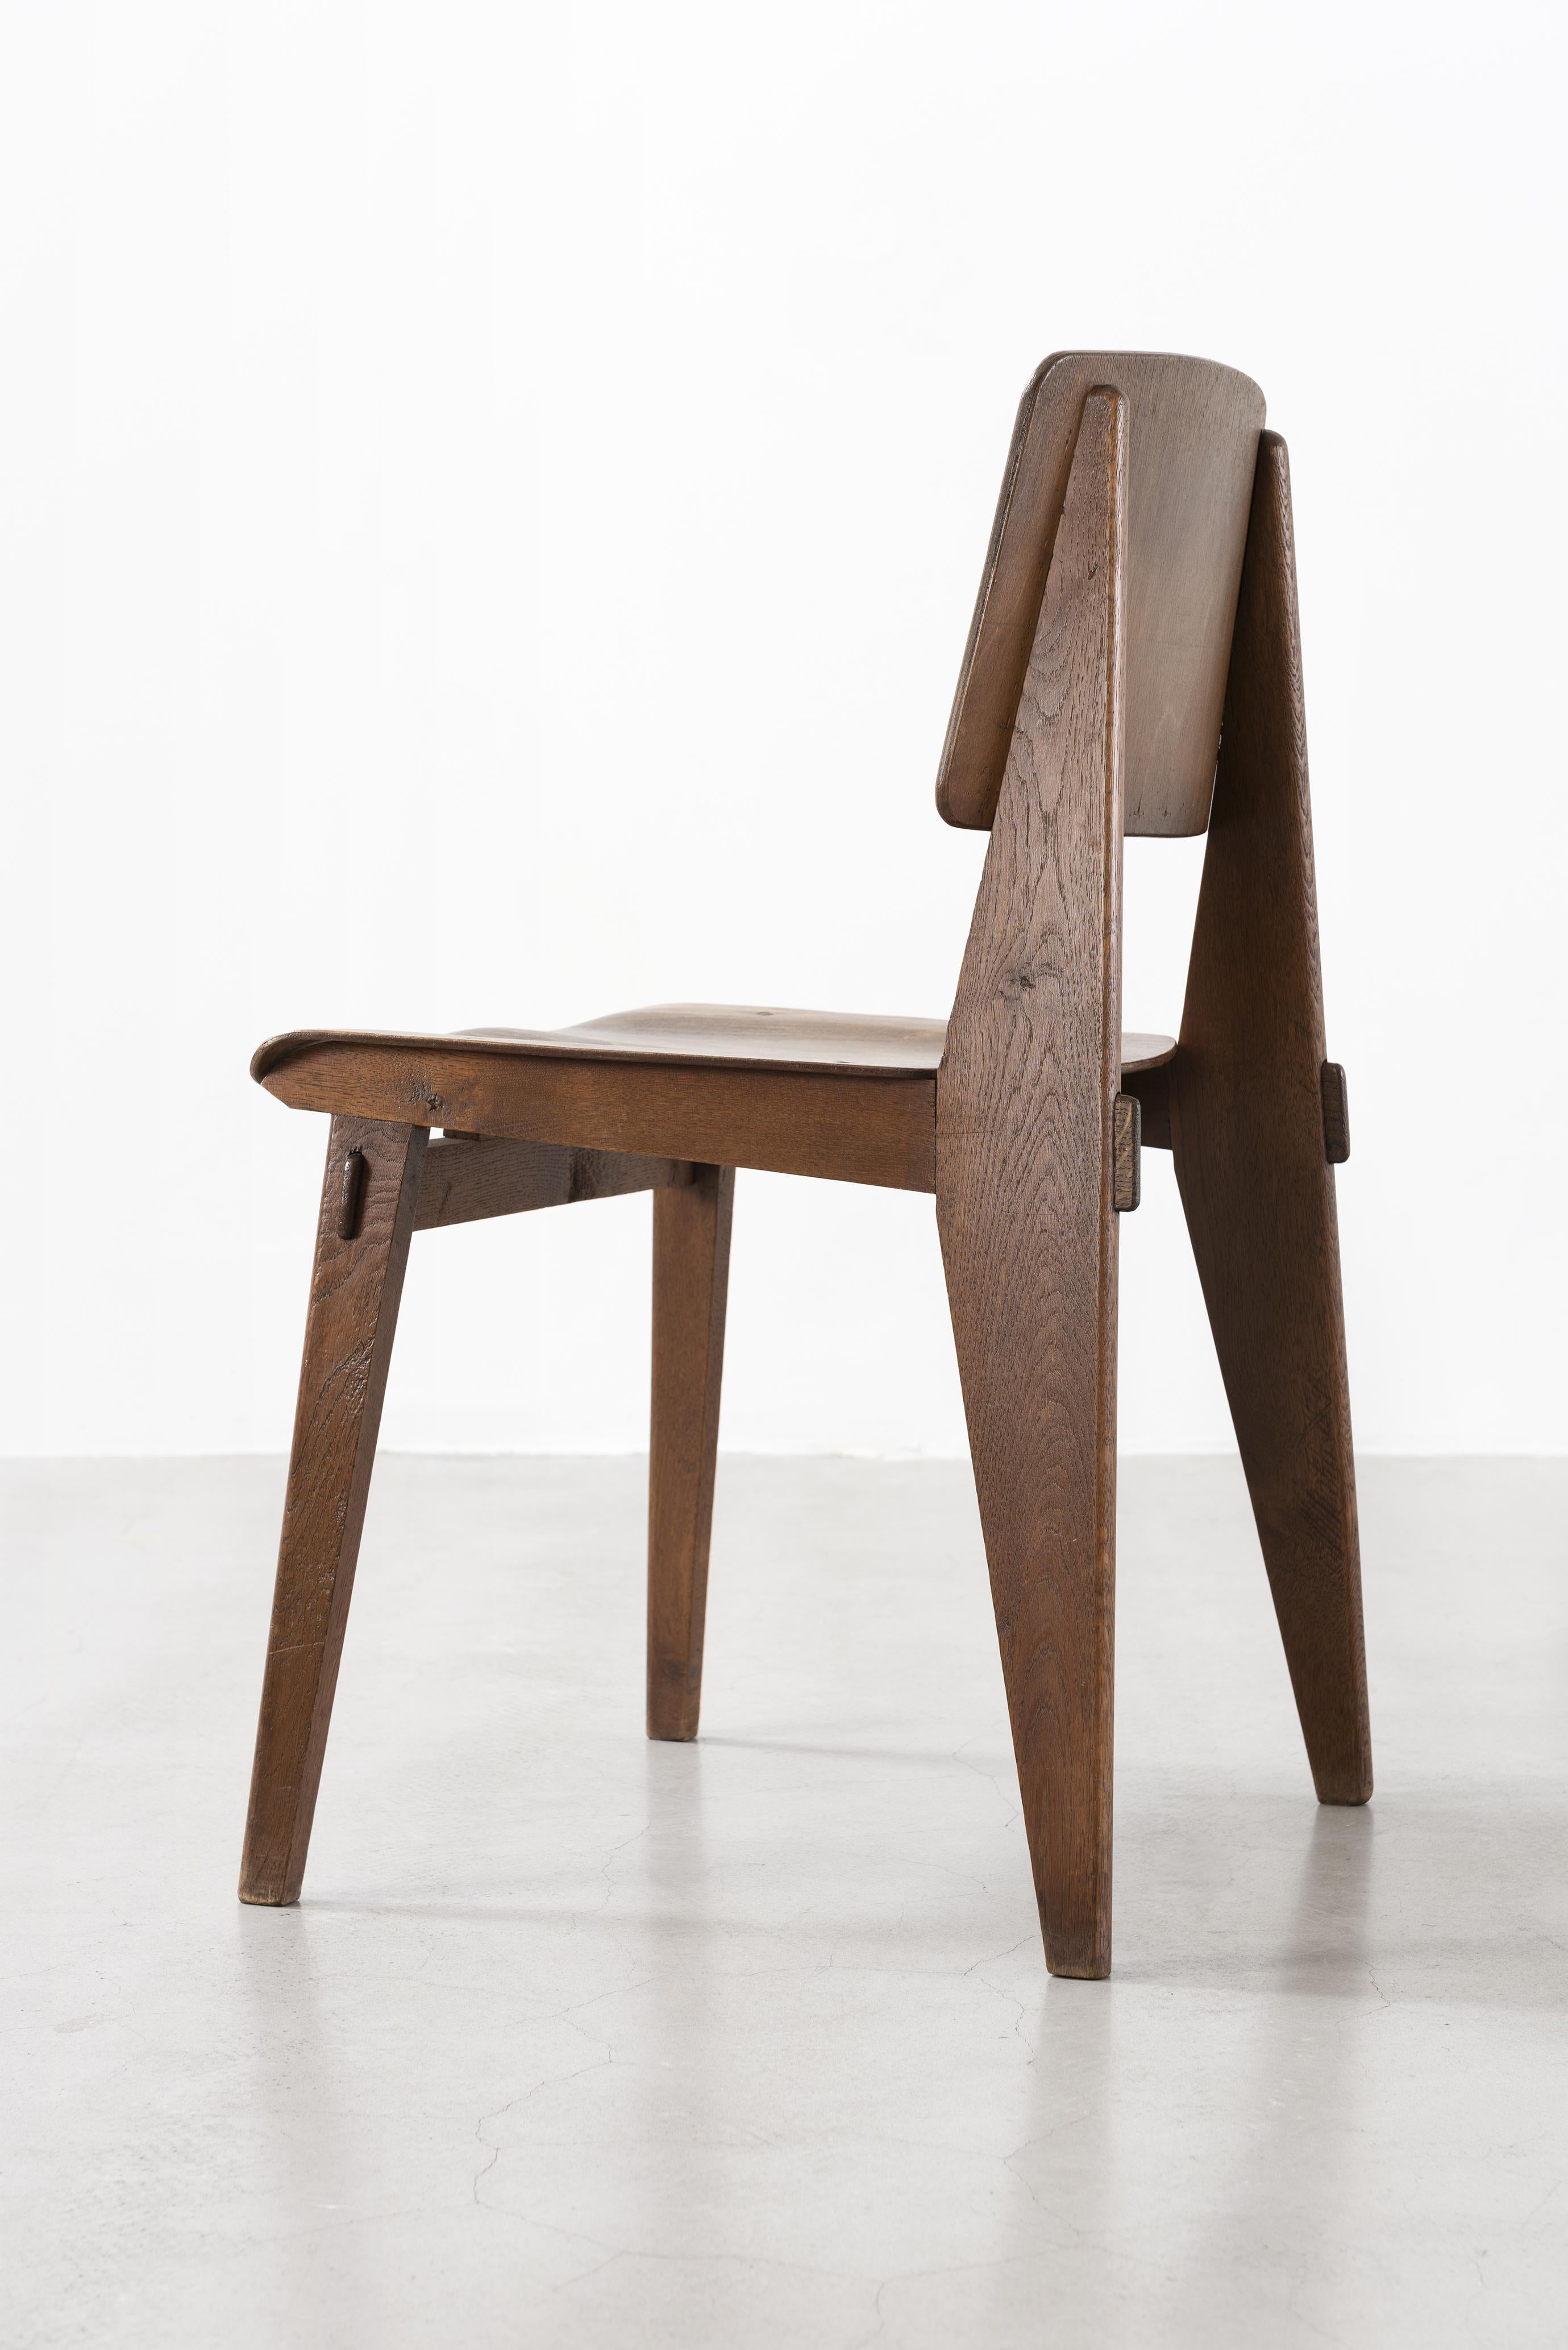 Jean Prouvé, Tout Bois Chair, 1941 For Sale at 1stDibs